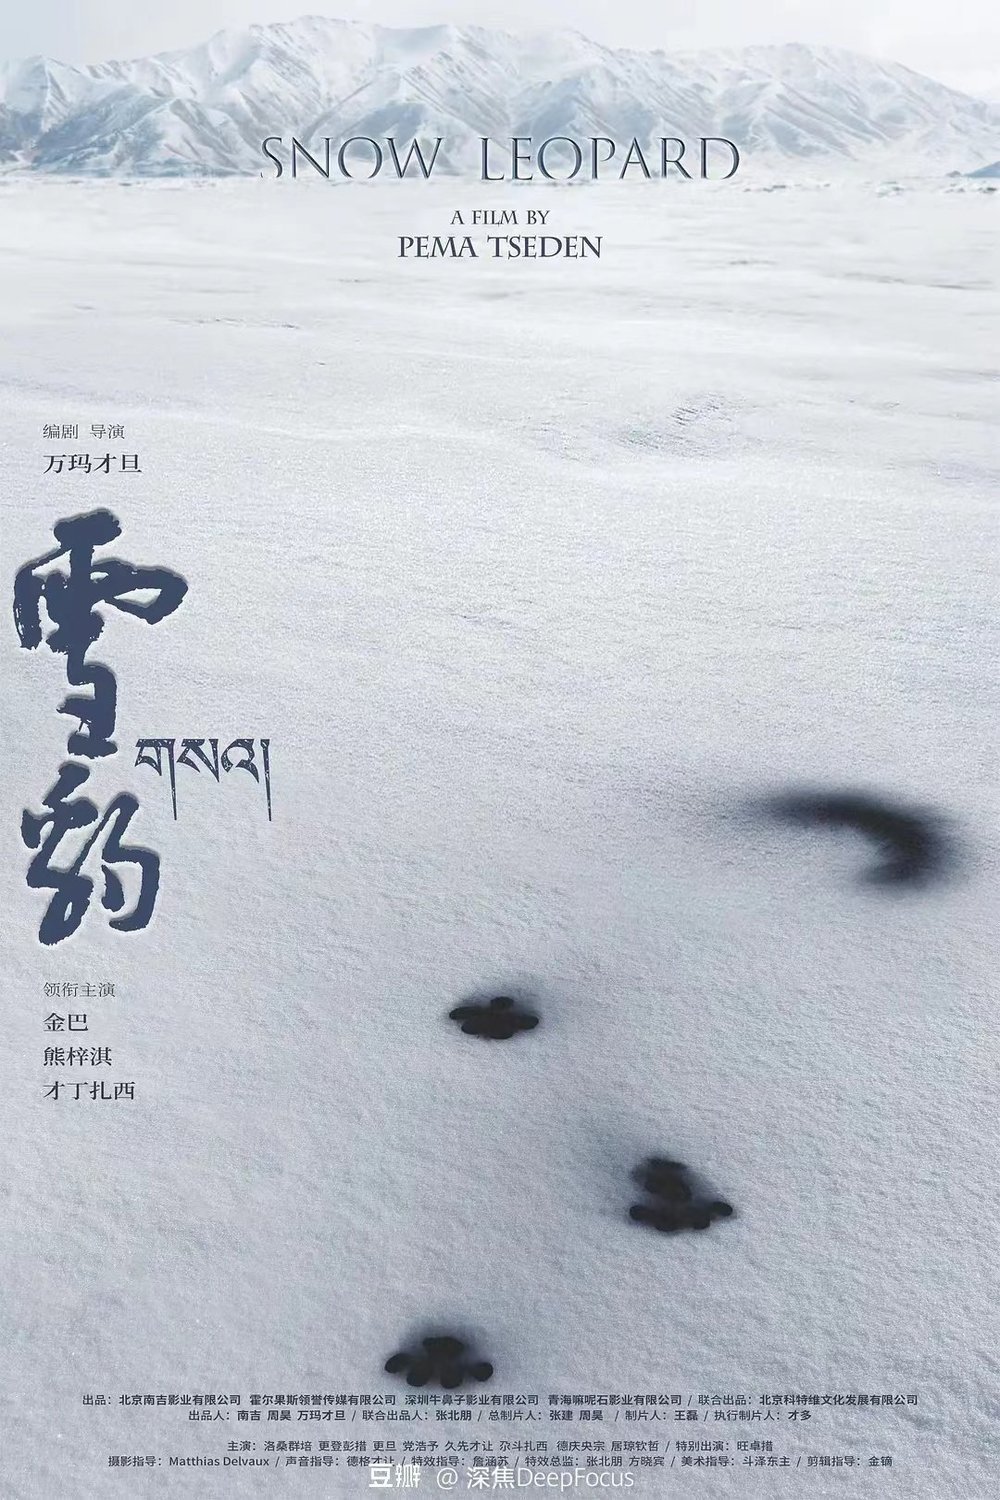 Tibetan poster of the movie Snow Leopard